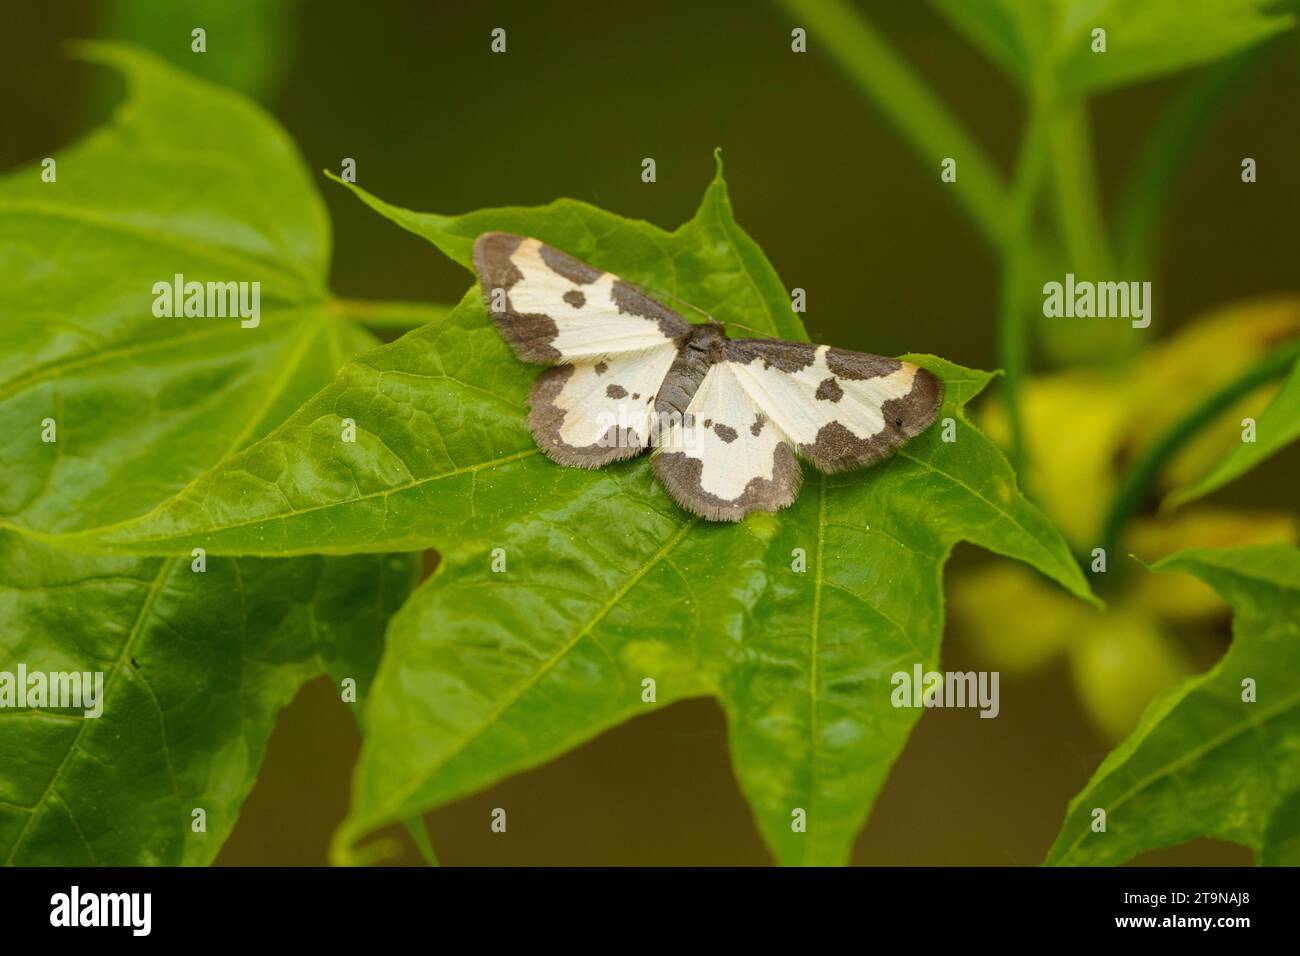 Lomaspilis marginata Family Geometridae Genus Lomaspilis Clouded border moth wild nature insect wallpaper, picture, photography Stock Photo